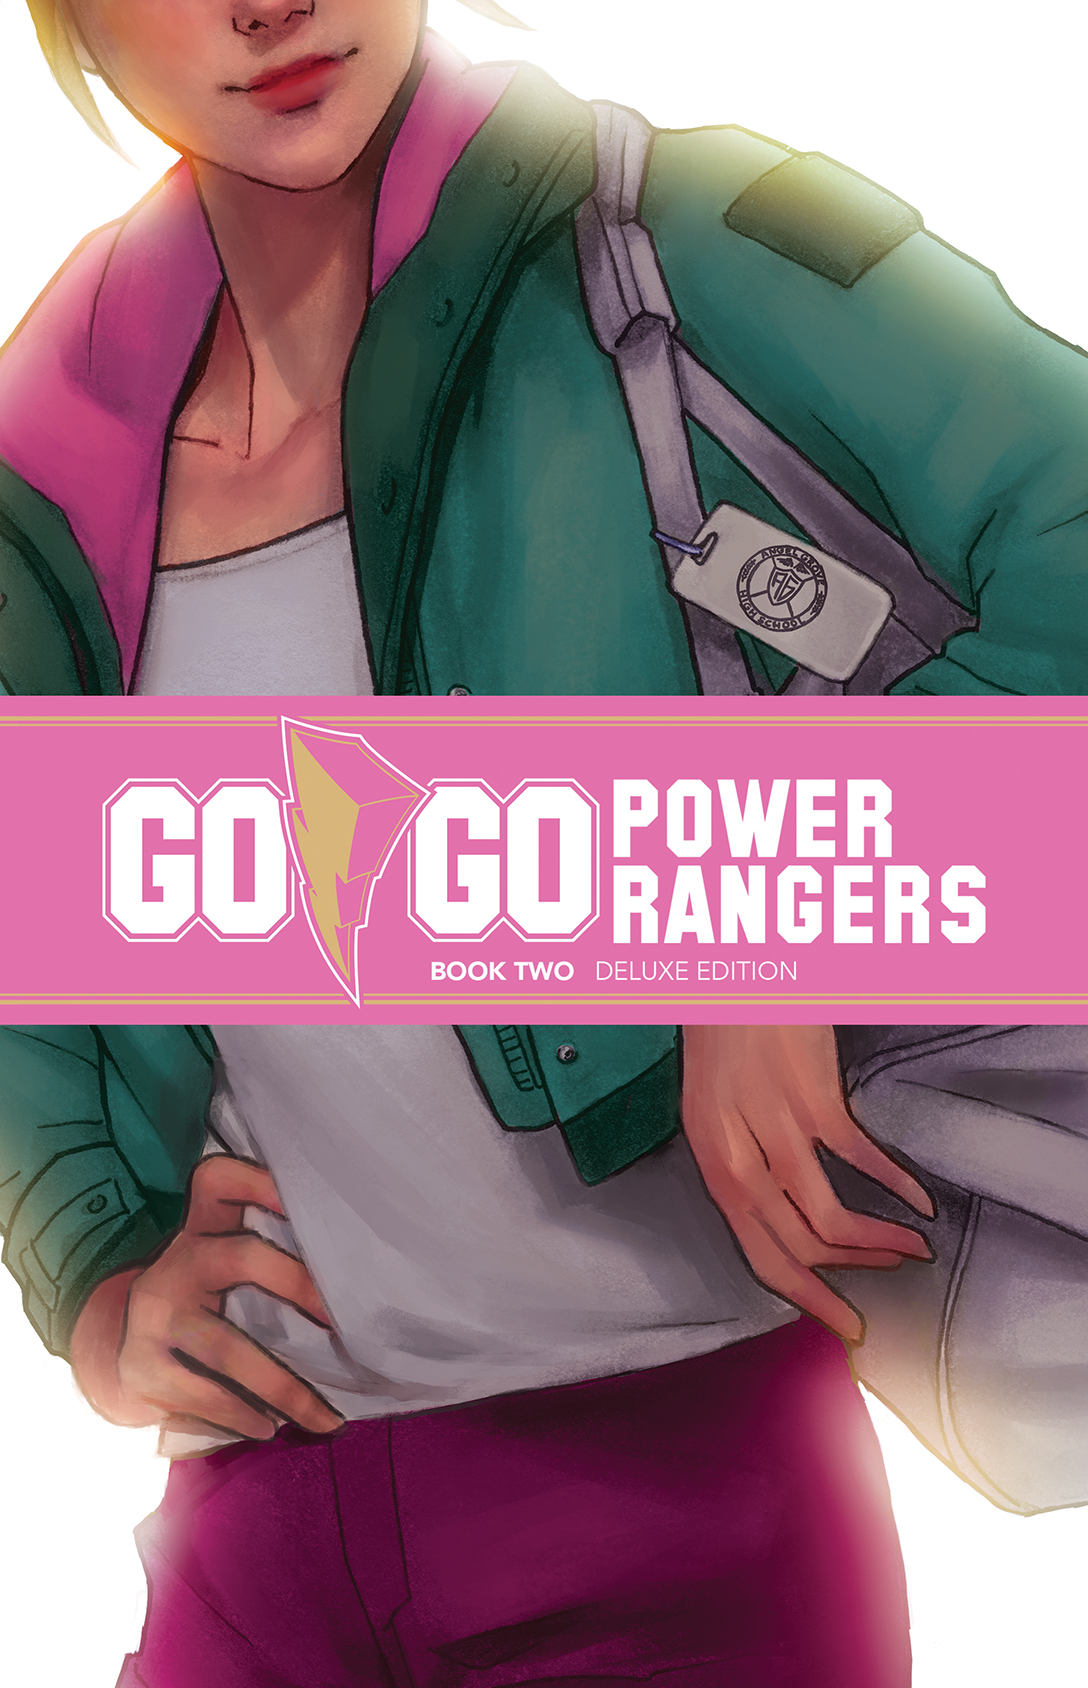 Go Go Power Rangers Deluxe Edition Hardcover Book 2